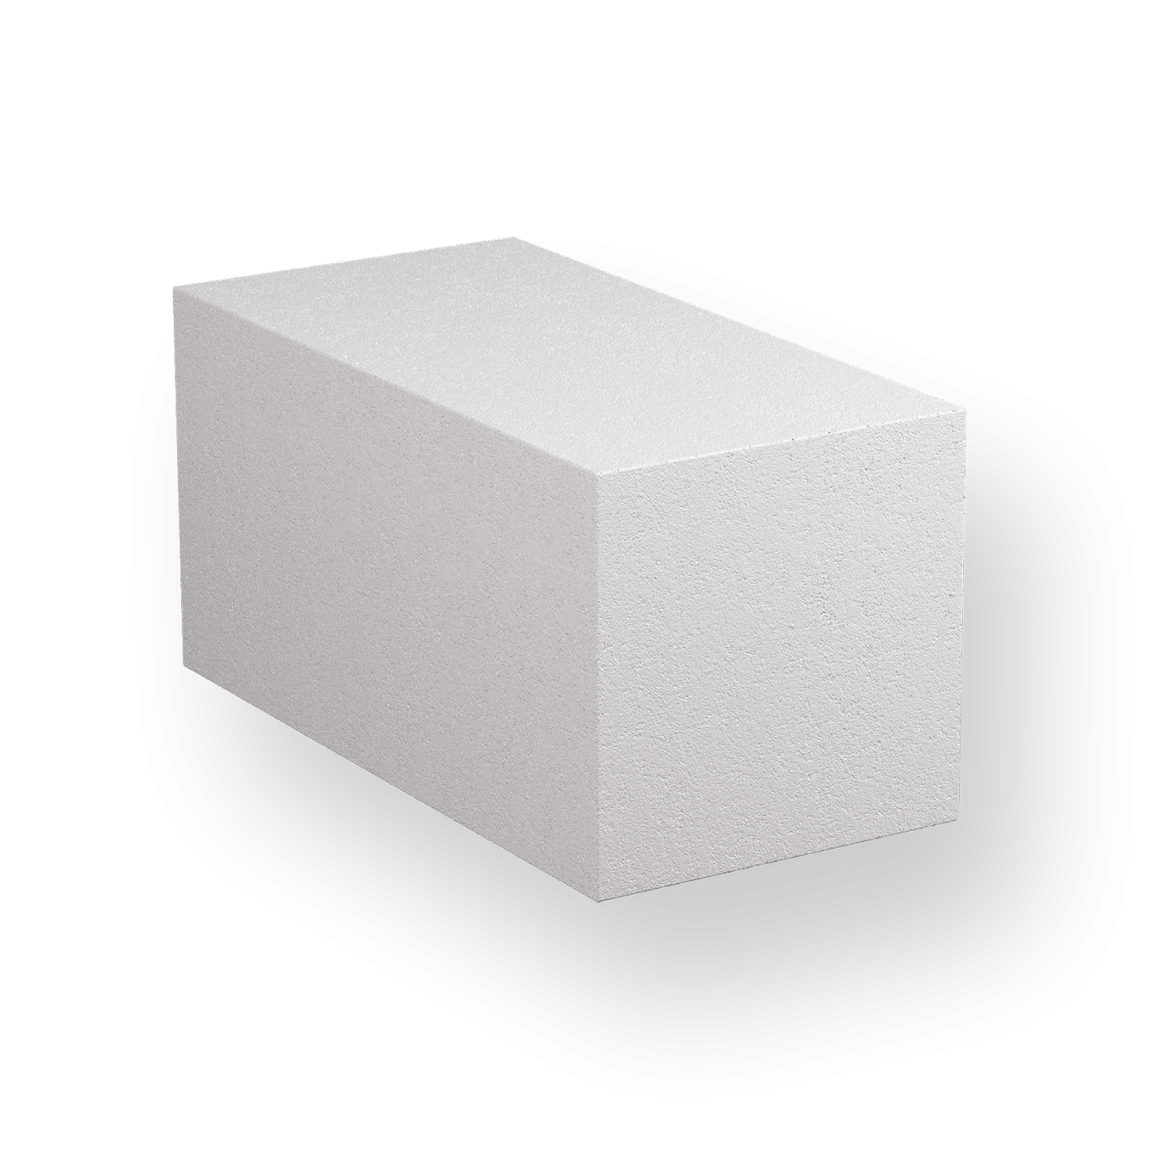 PORFIX tvárnice 375x250x500mm hladká P2-440 písková (32) - Hrubá stavba zdící materiály porobetonové a vápenopískové zdící materiály porfix